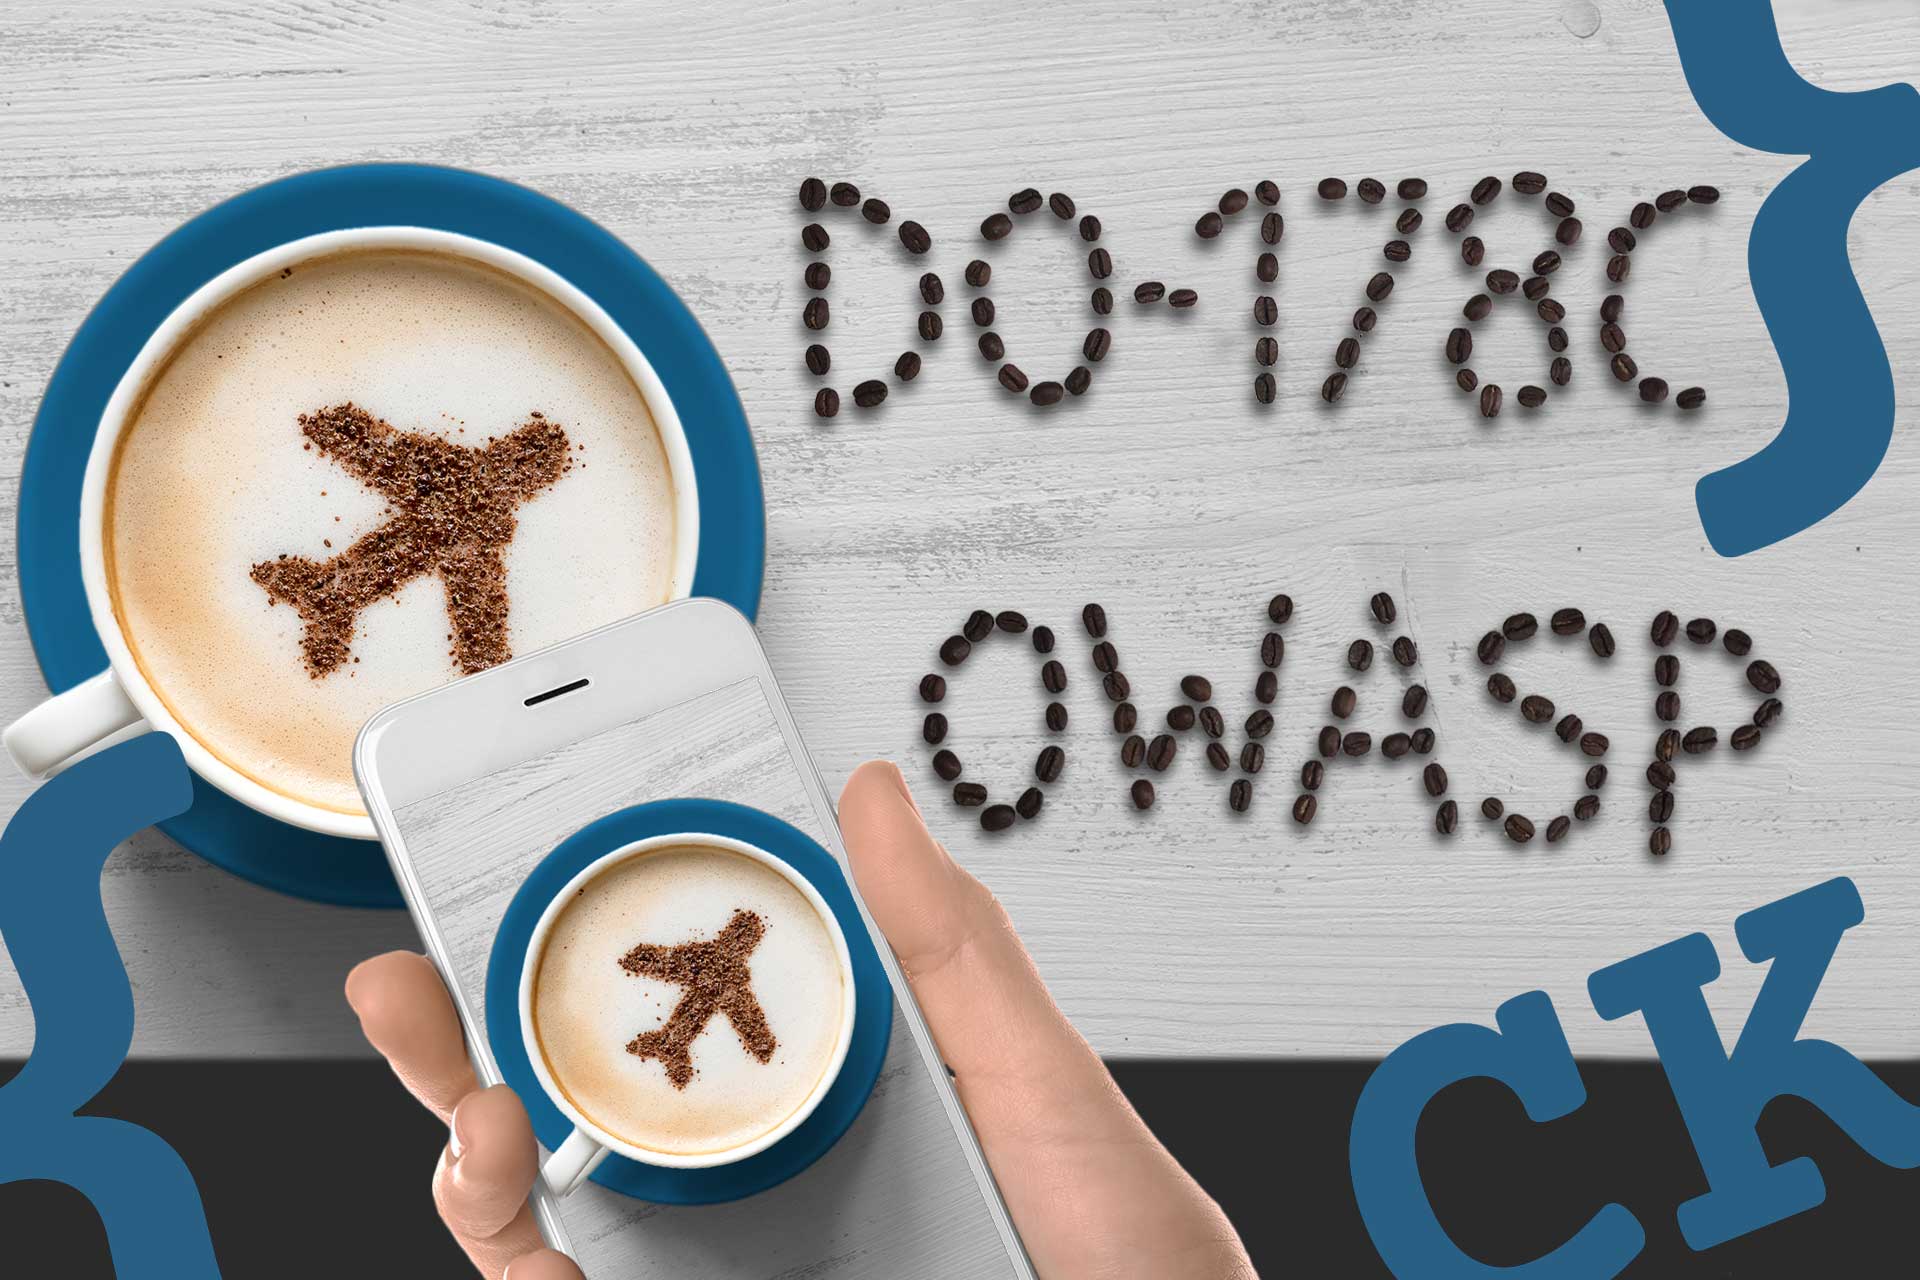 DO-178C and OWASP in avionics app testing